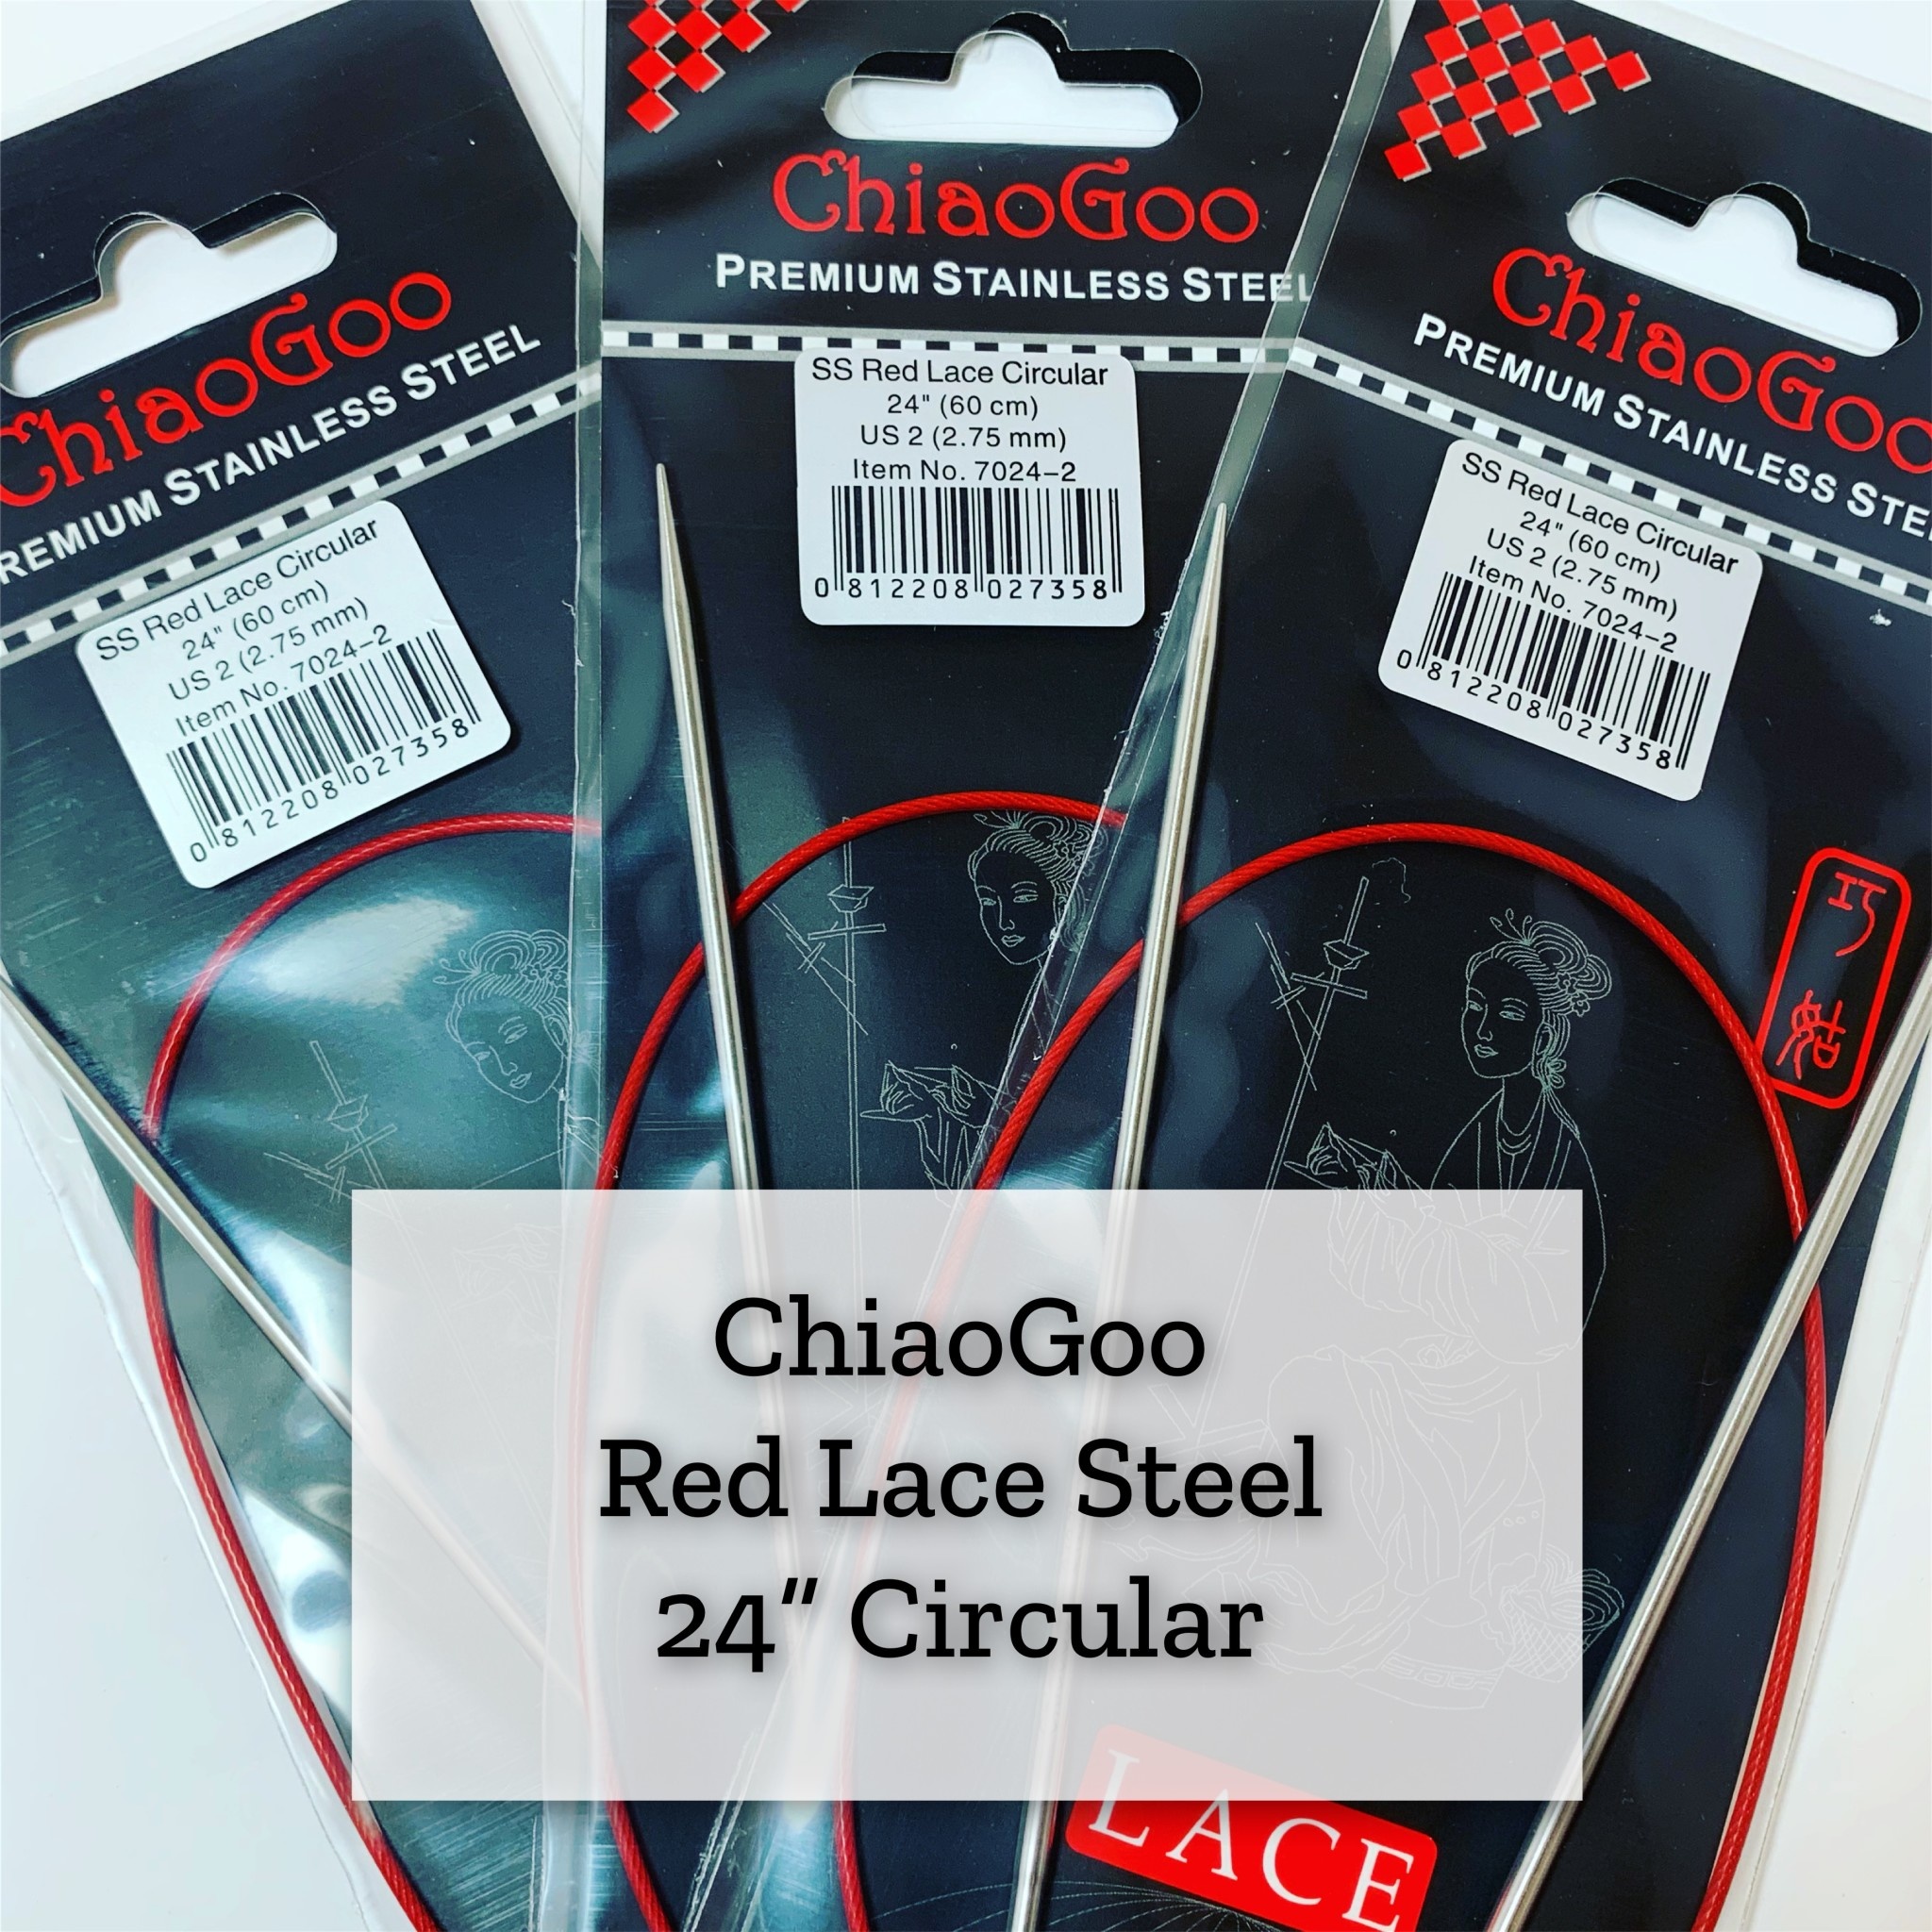 ChiaoGoo Red Lace Steel - 24" 3.5 mm